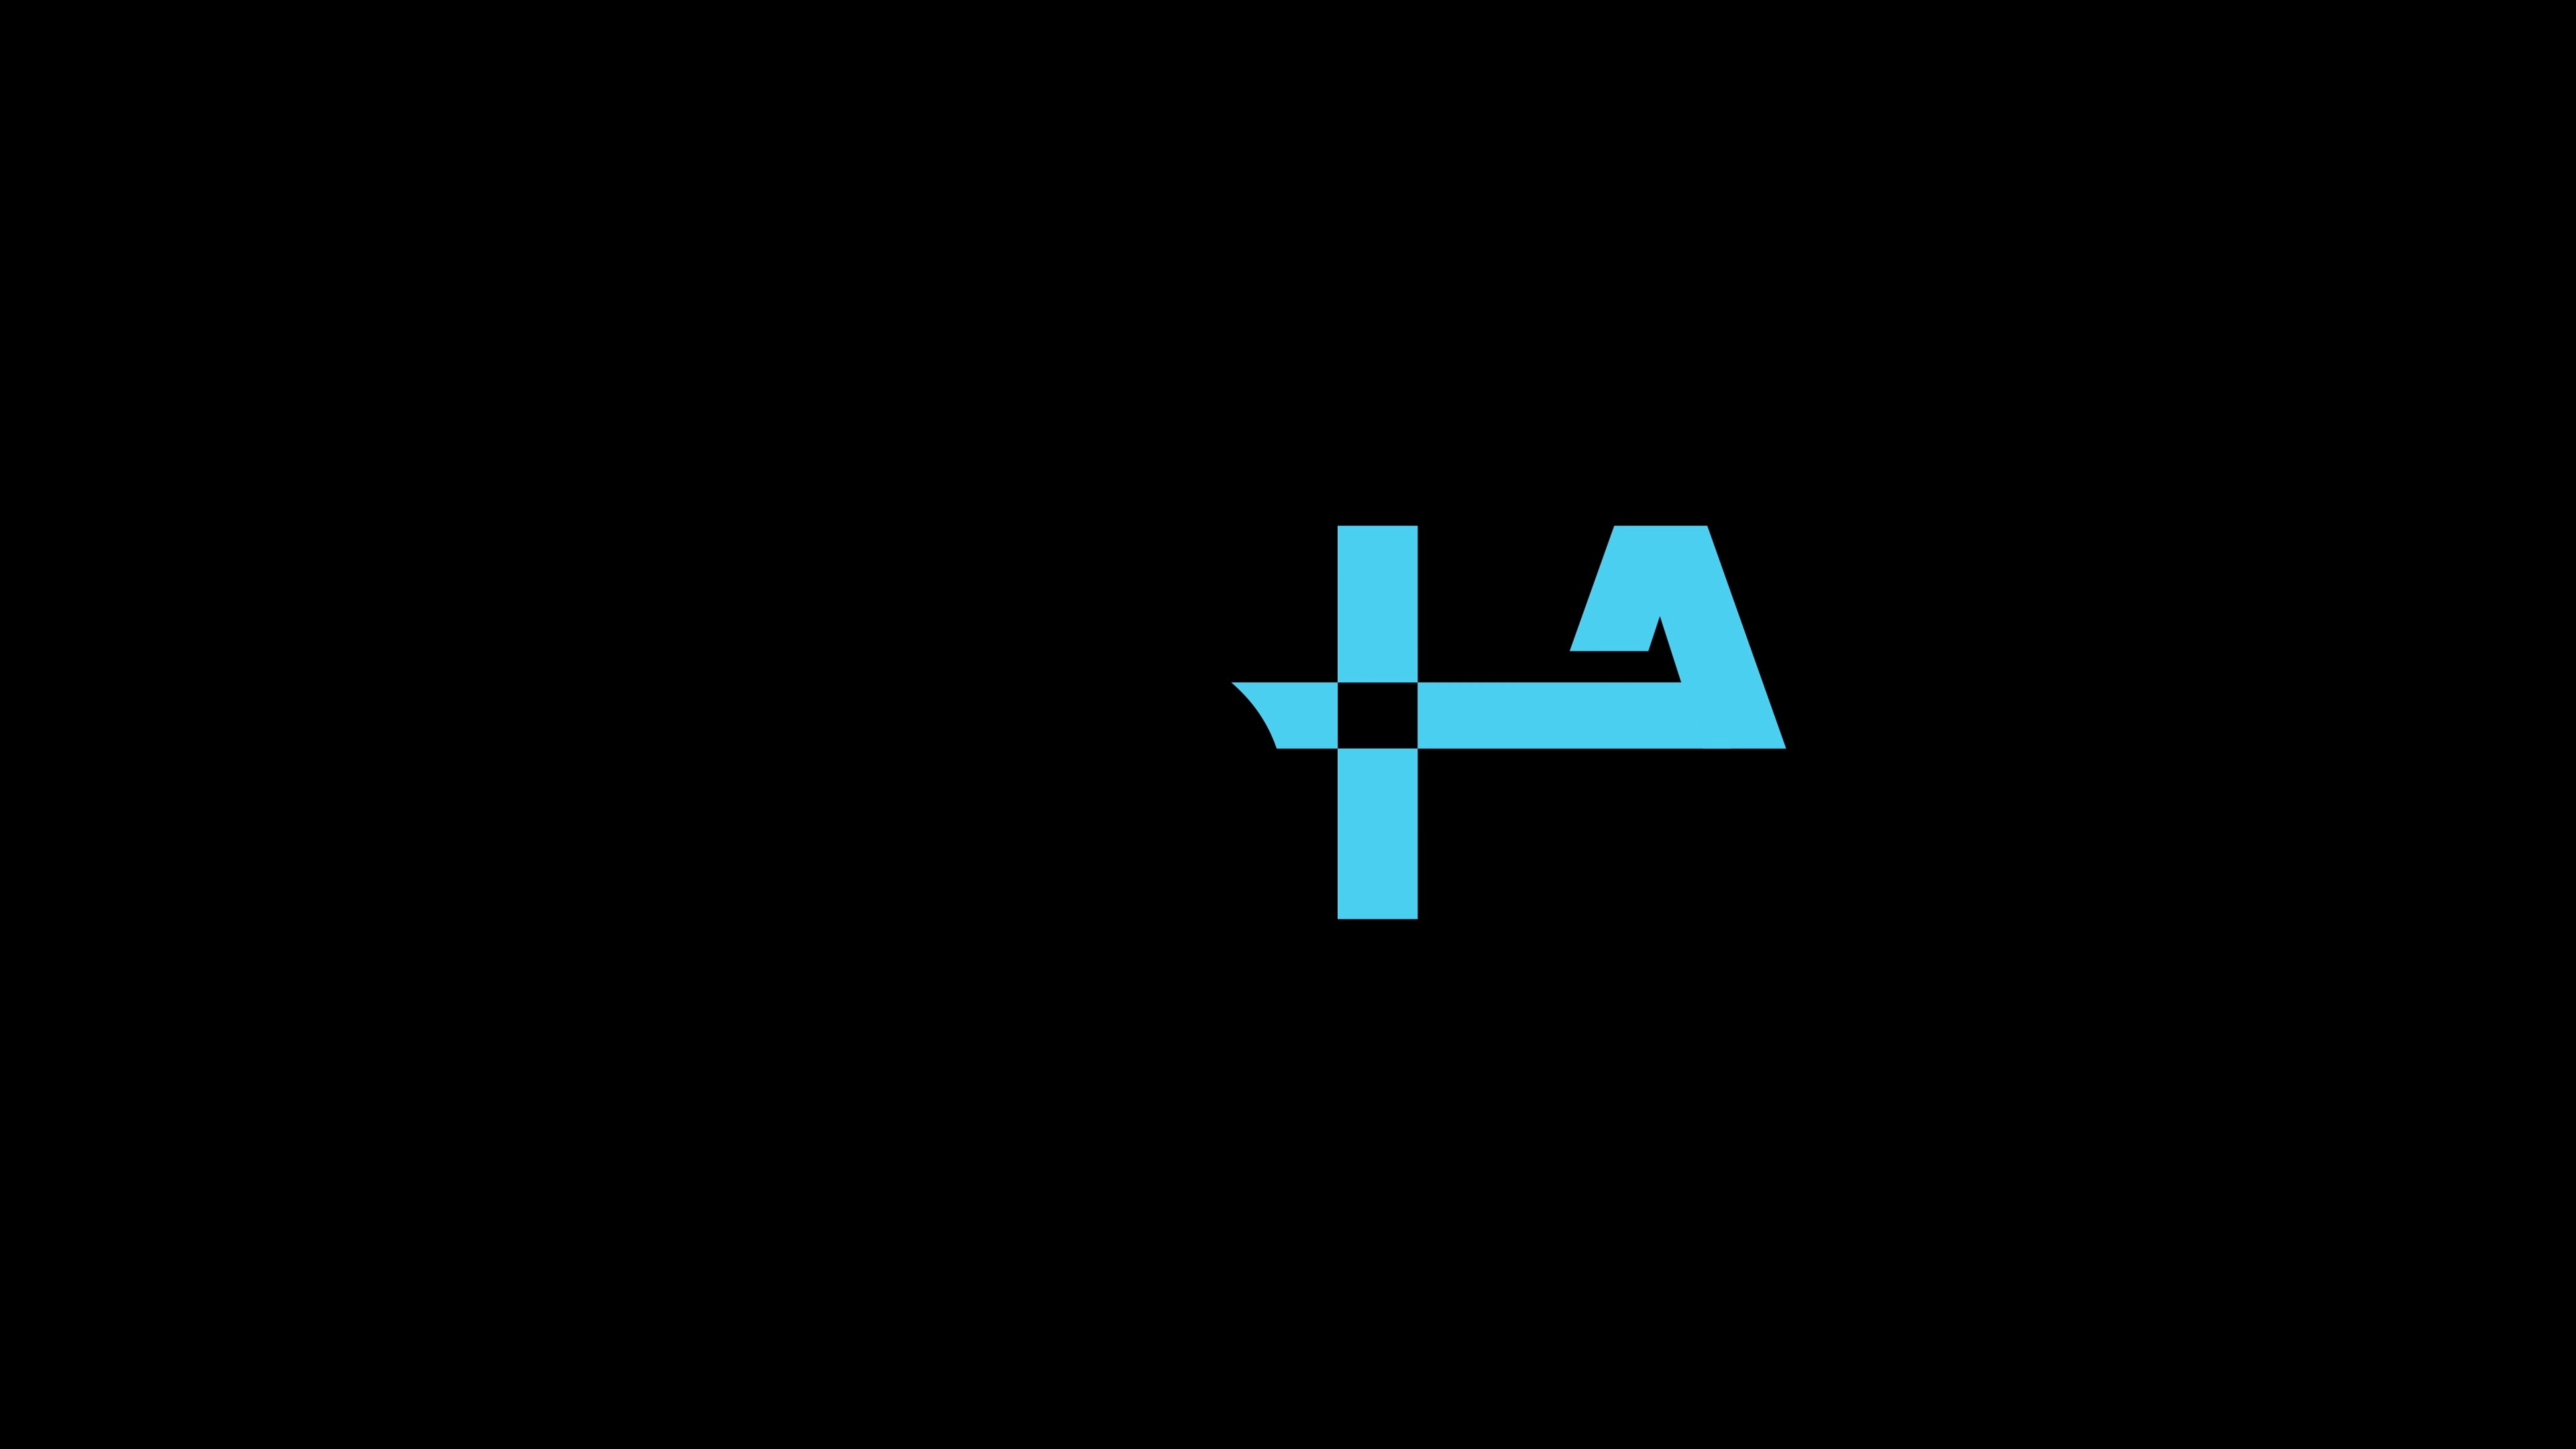 COTA logo and motion graphics